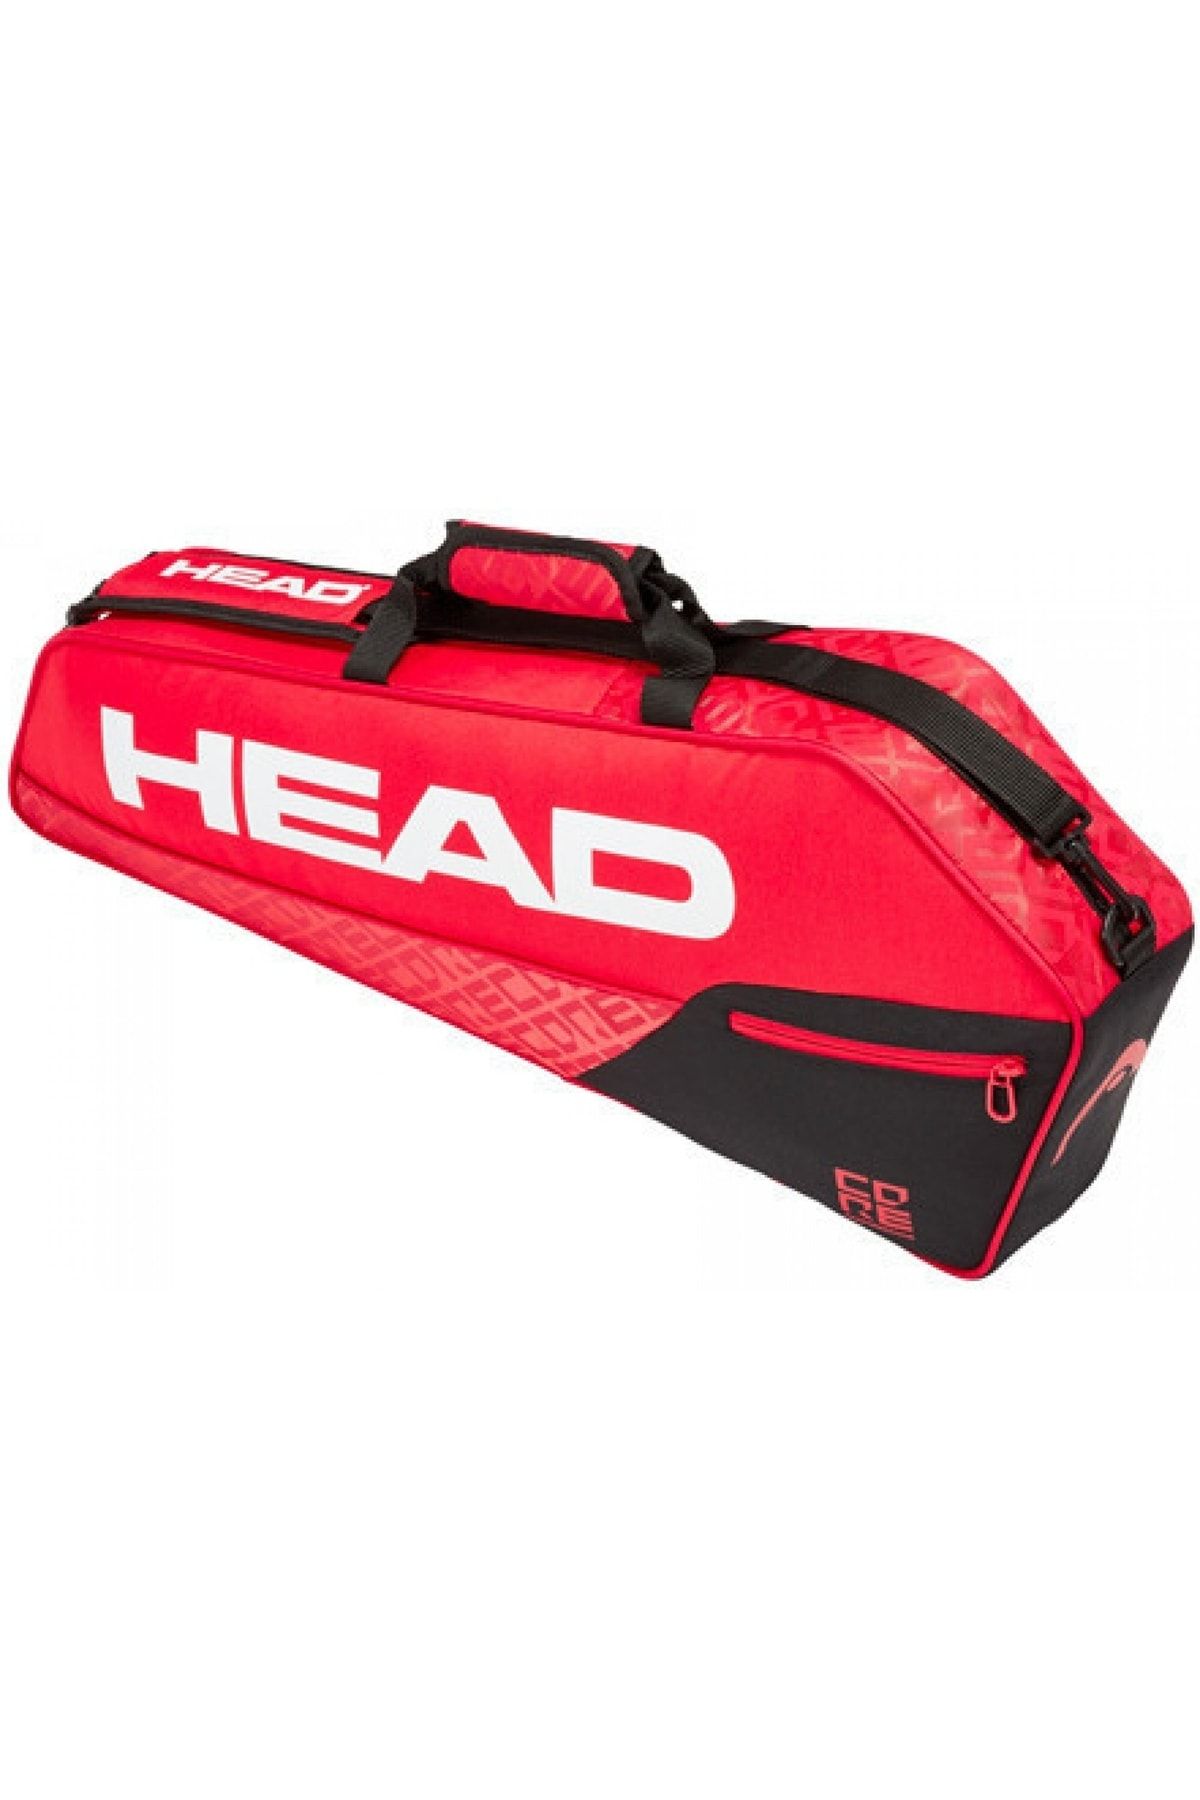 Head Core 3r Pro Black Red Tenis Çantası